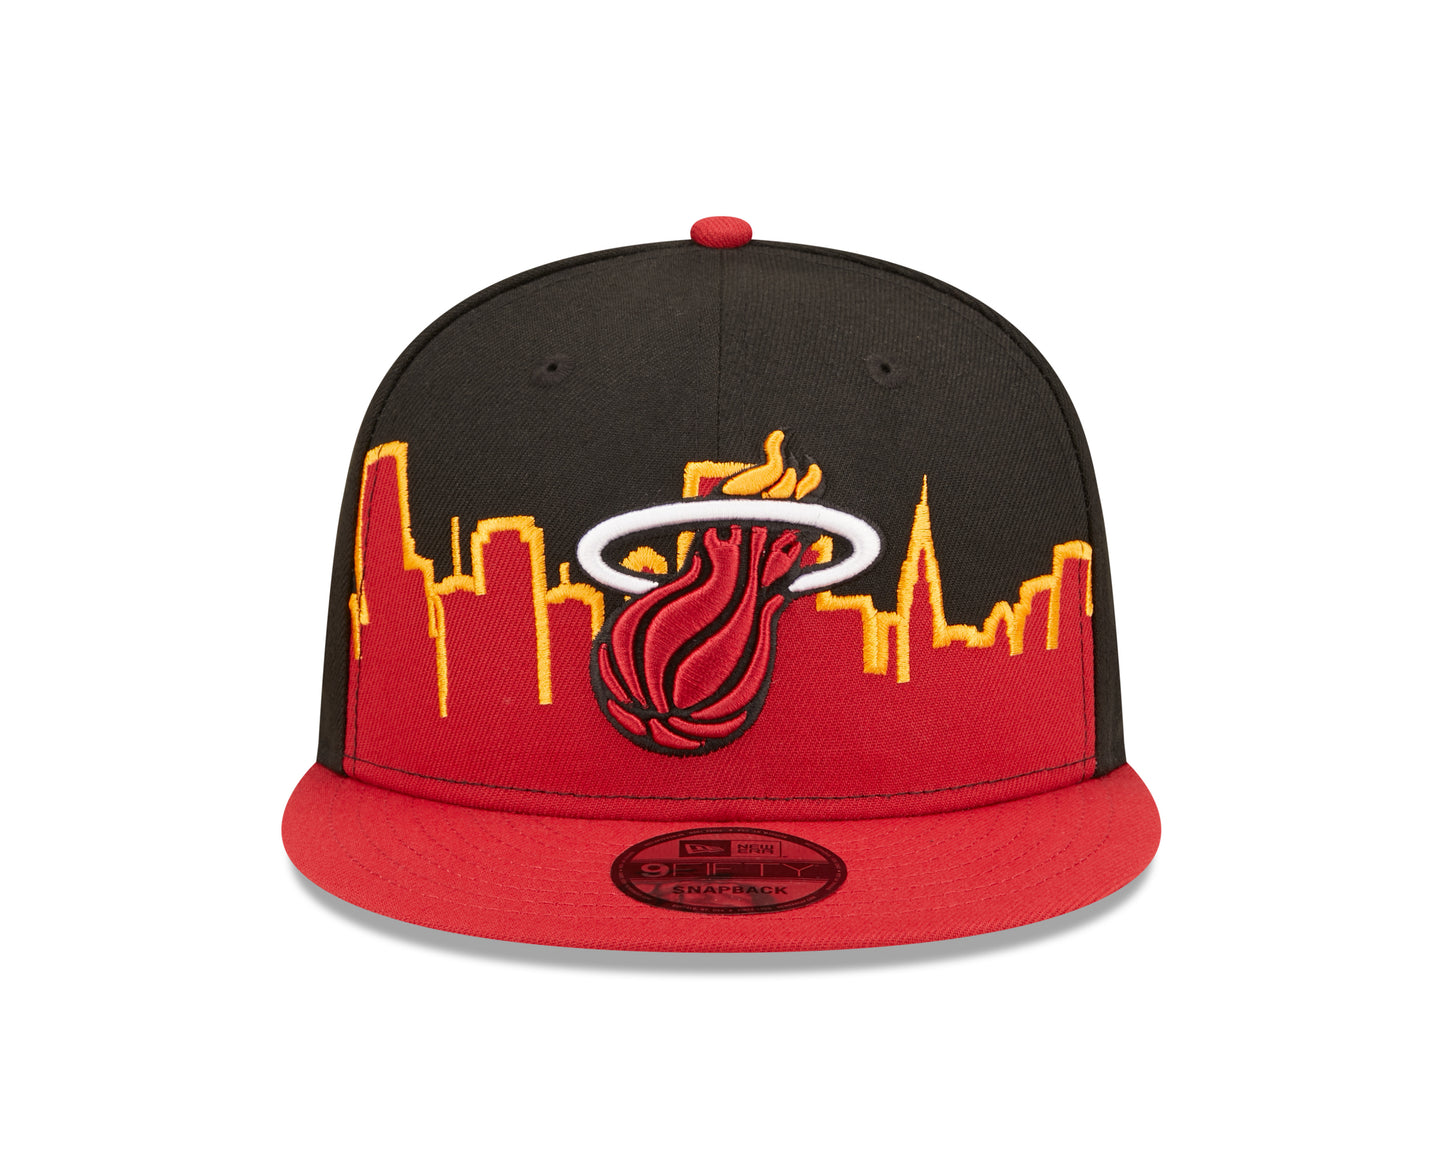 Miami Heat New Era Tip-Off 9FIFTY Snap Back Hat - Burgundy/Black